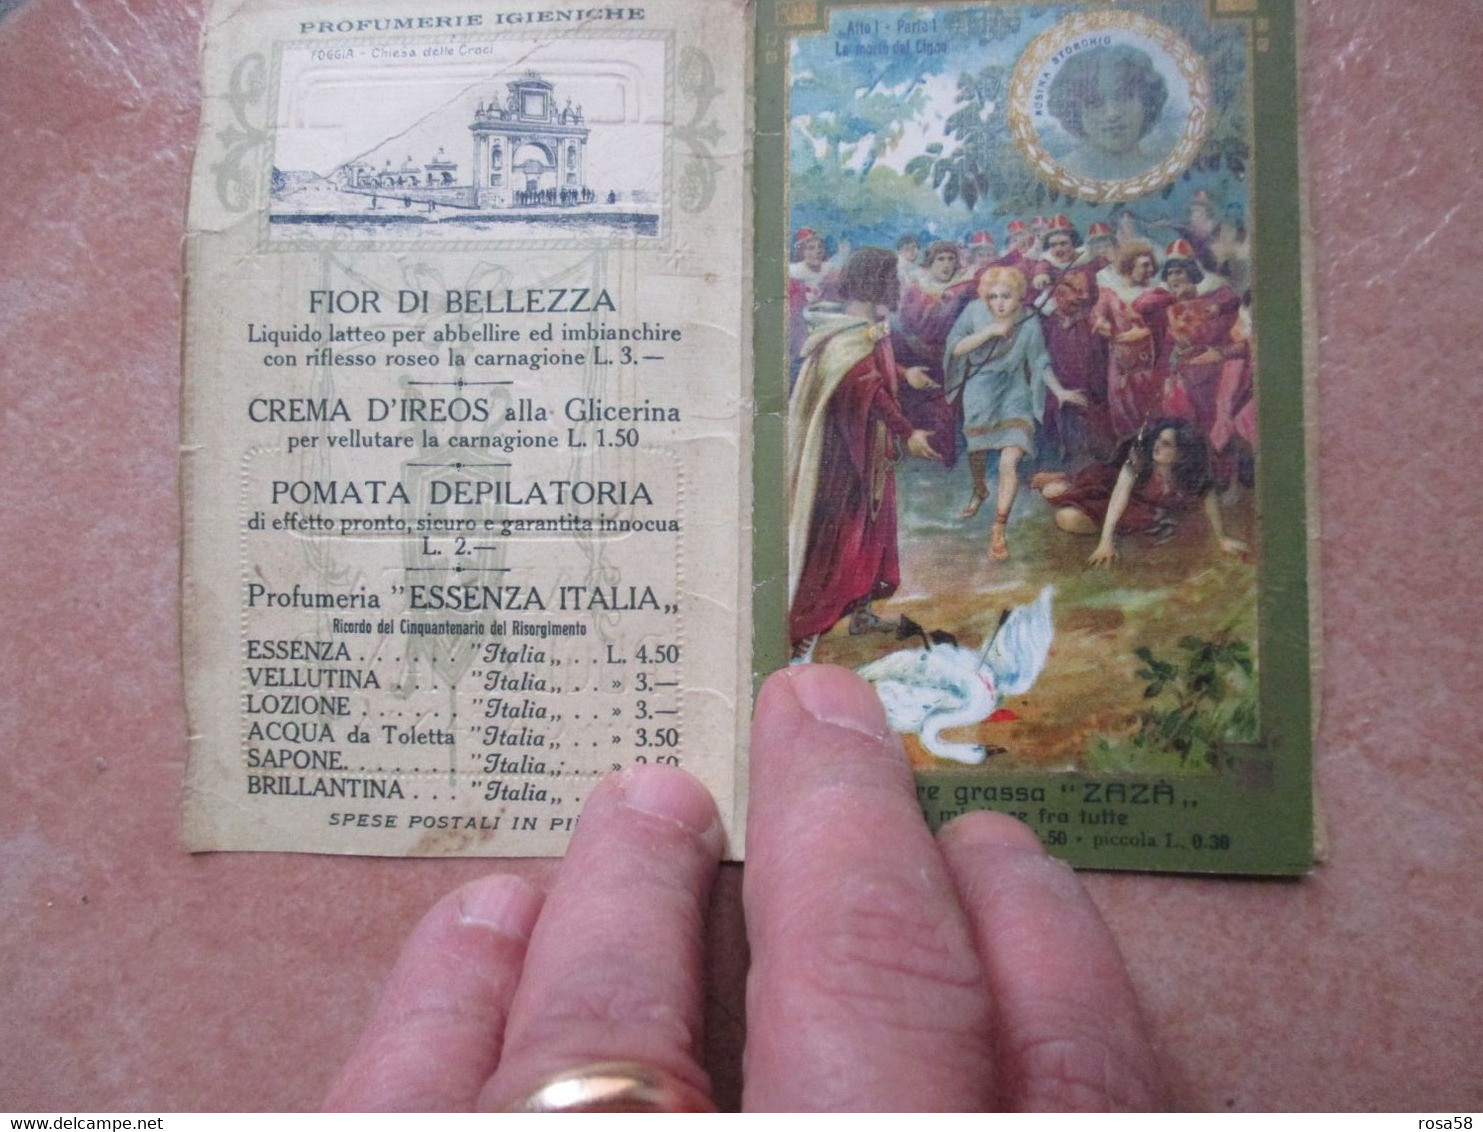 SPORT 1915 PARSIFAL Puglisi E Manara CATANIA Profumerie Igieniche - Grand Format : 1901-20